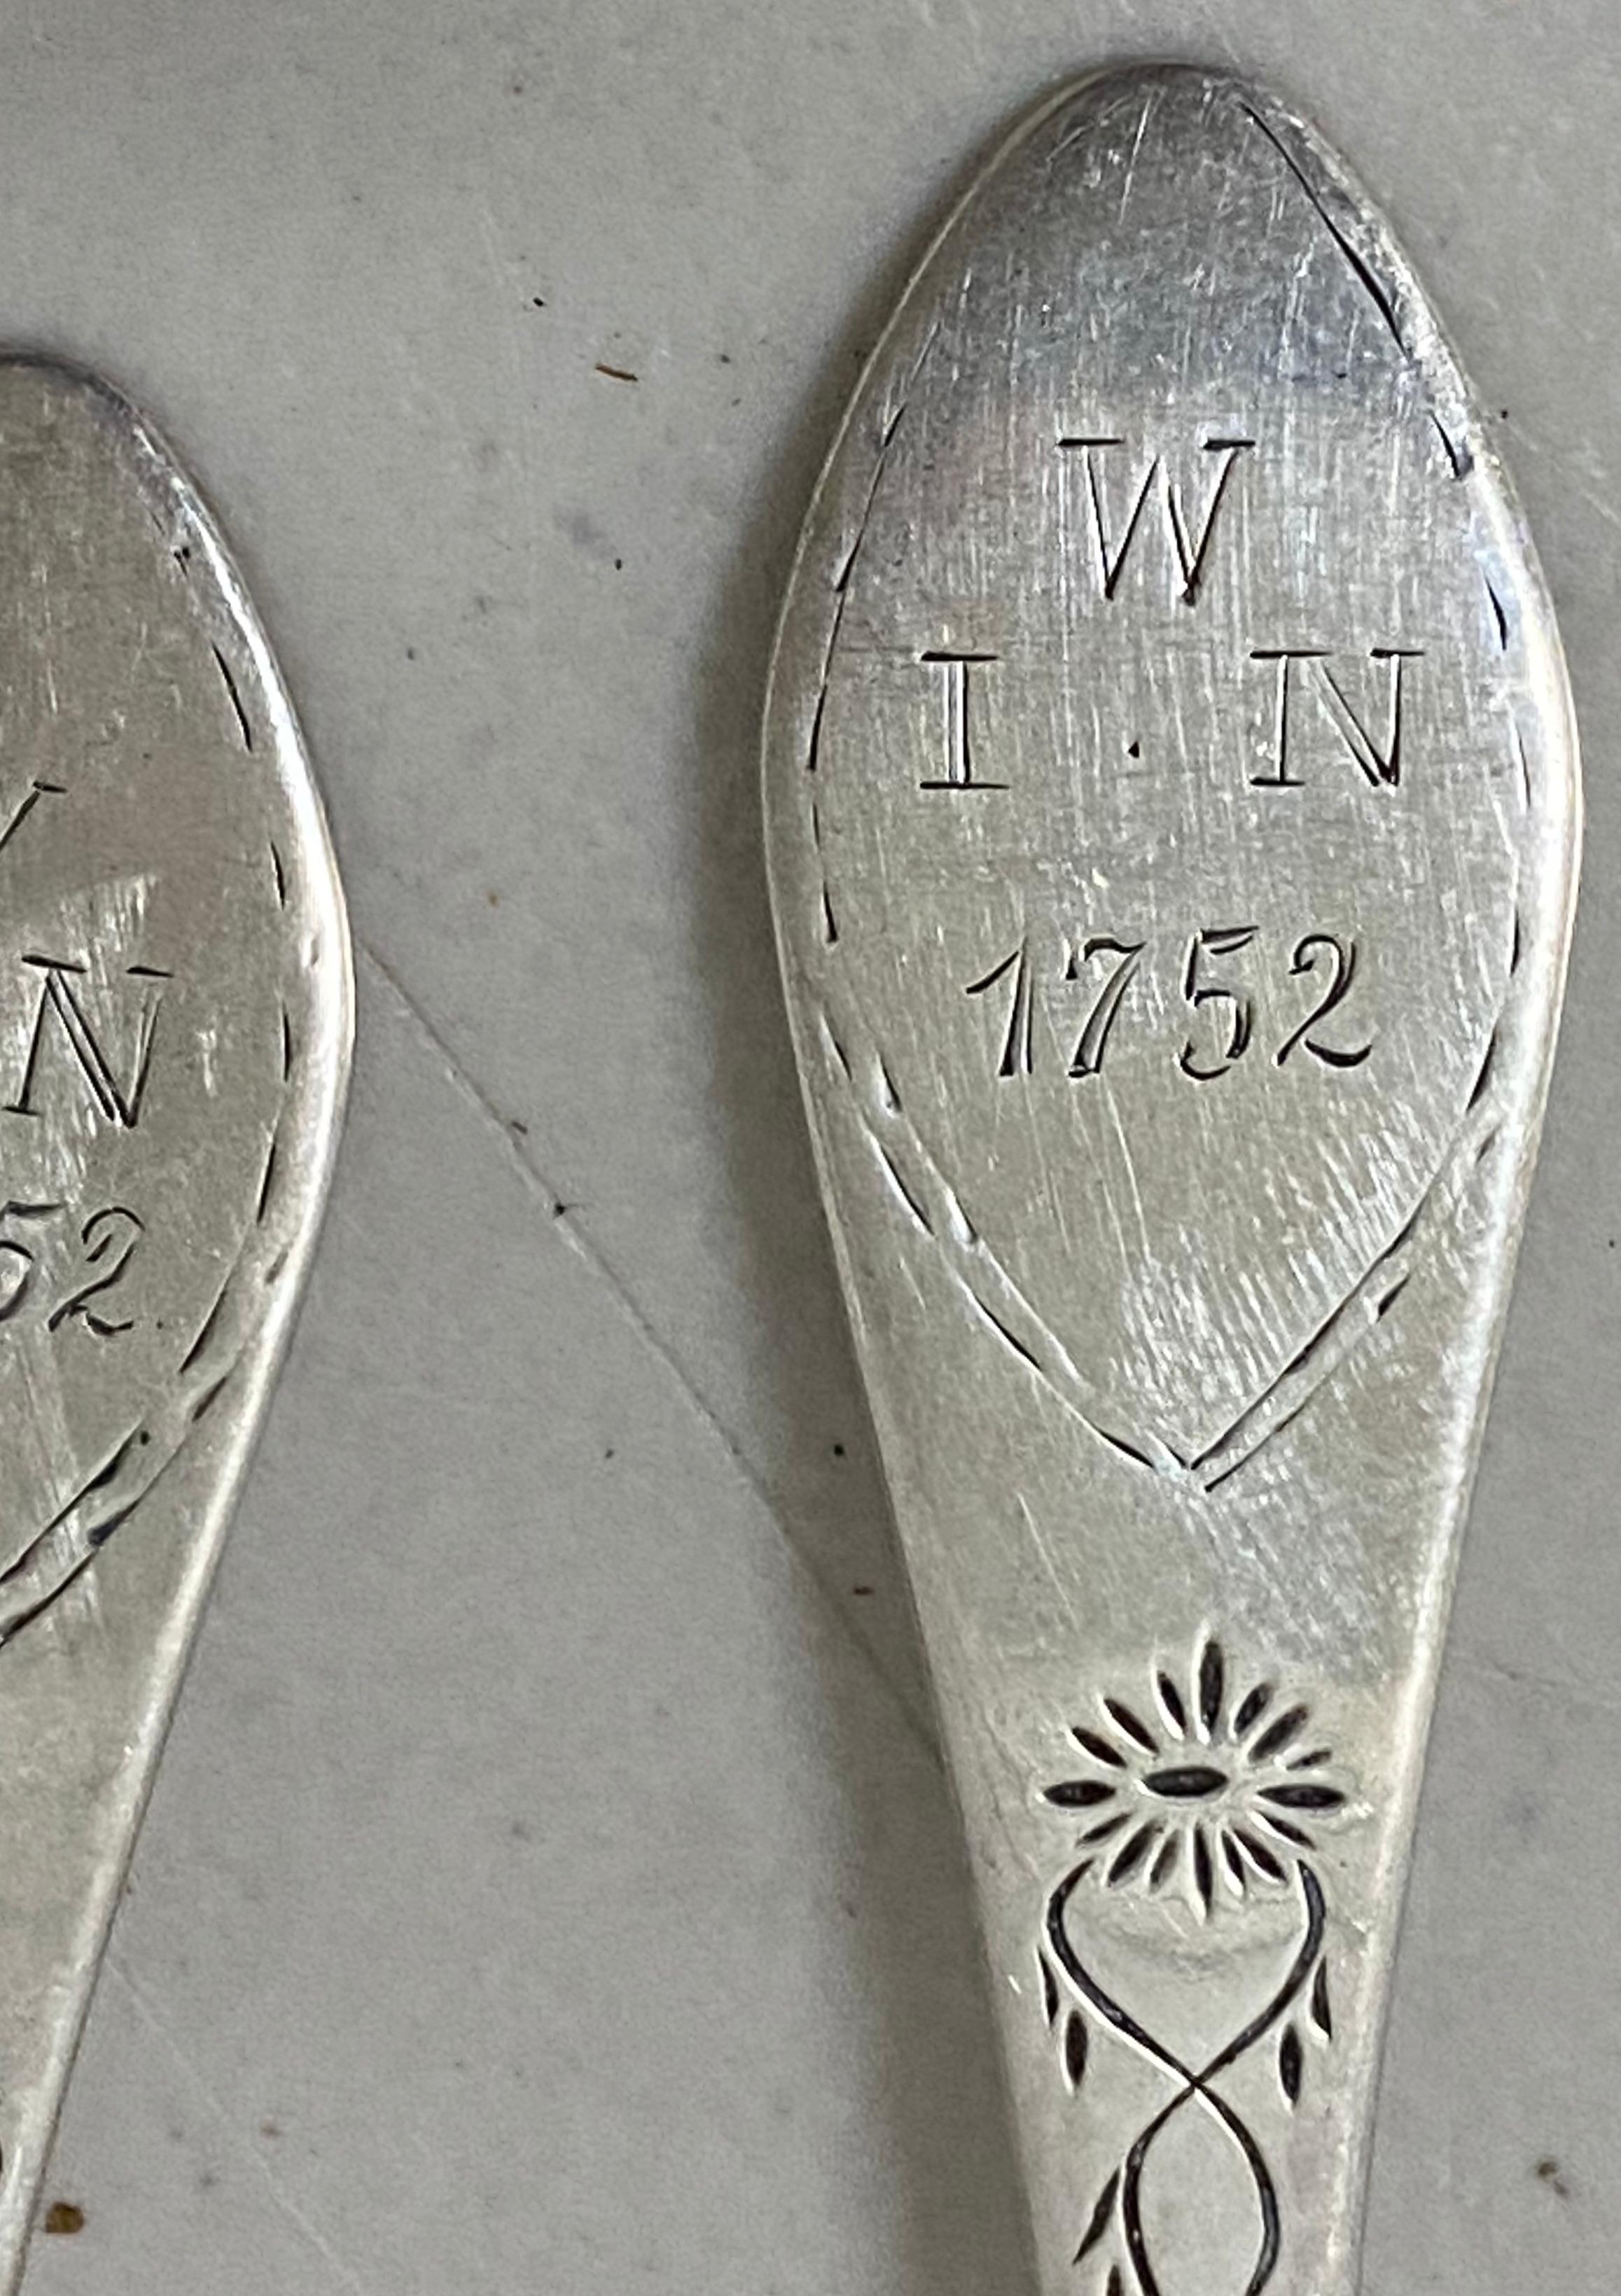 18th century old spoons identifier